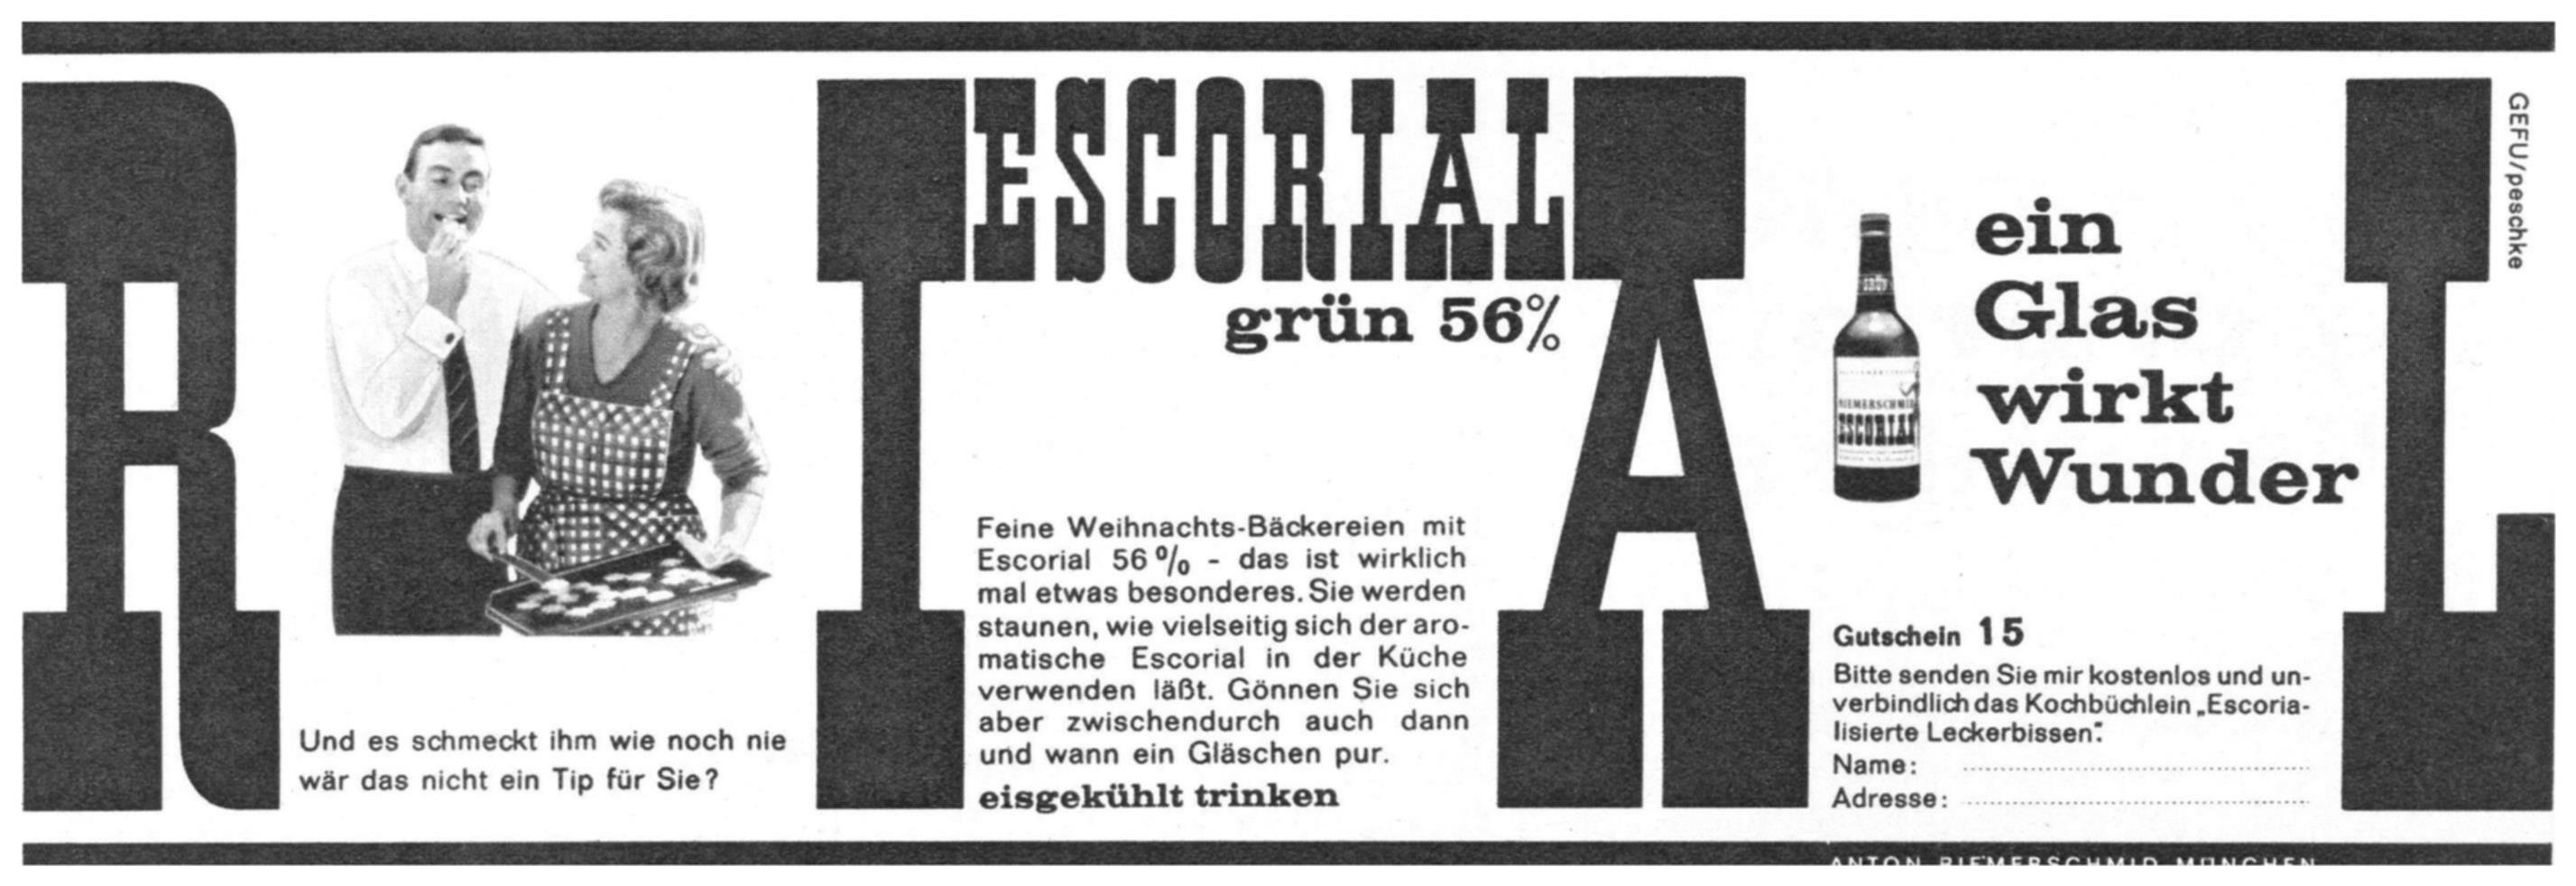 Escorial1961 7-2.jpg